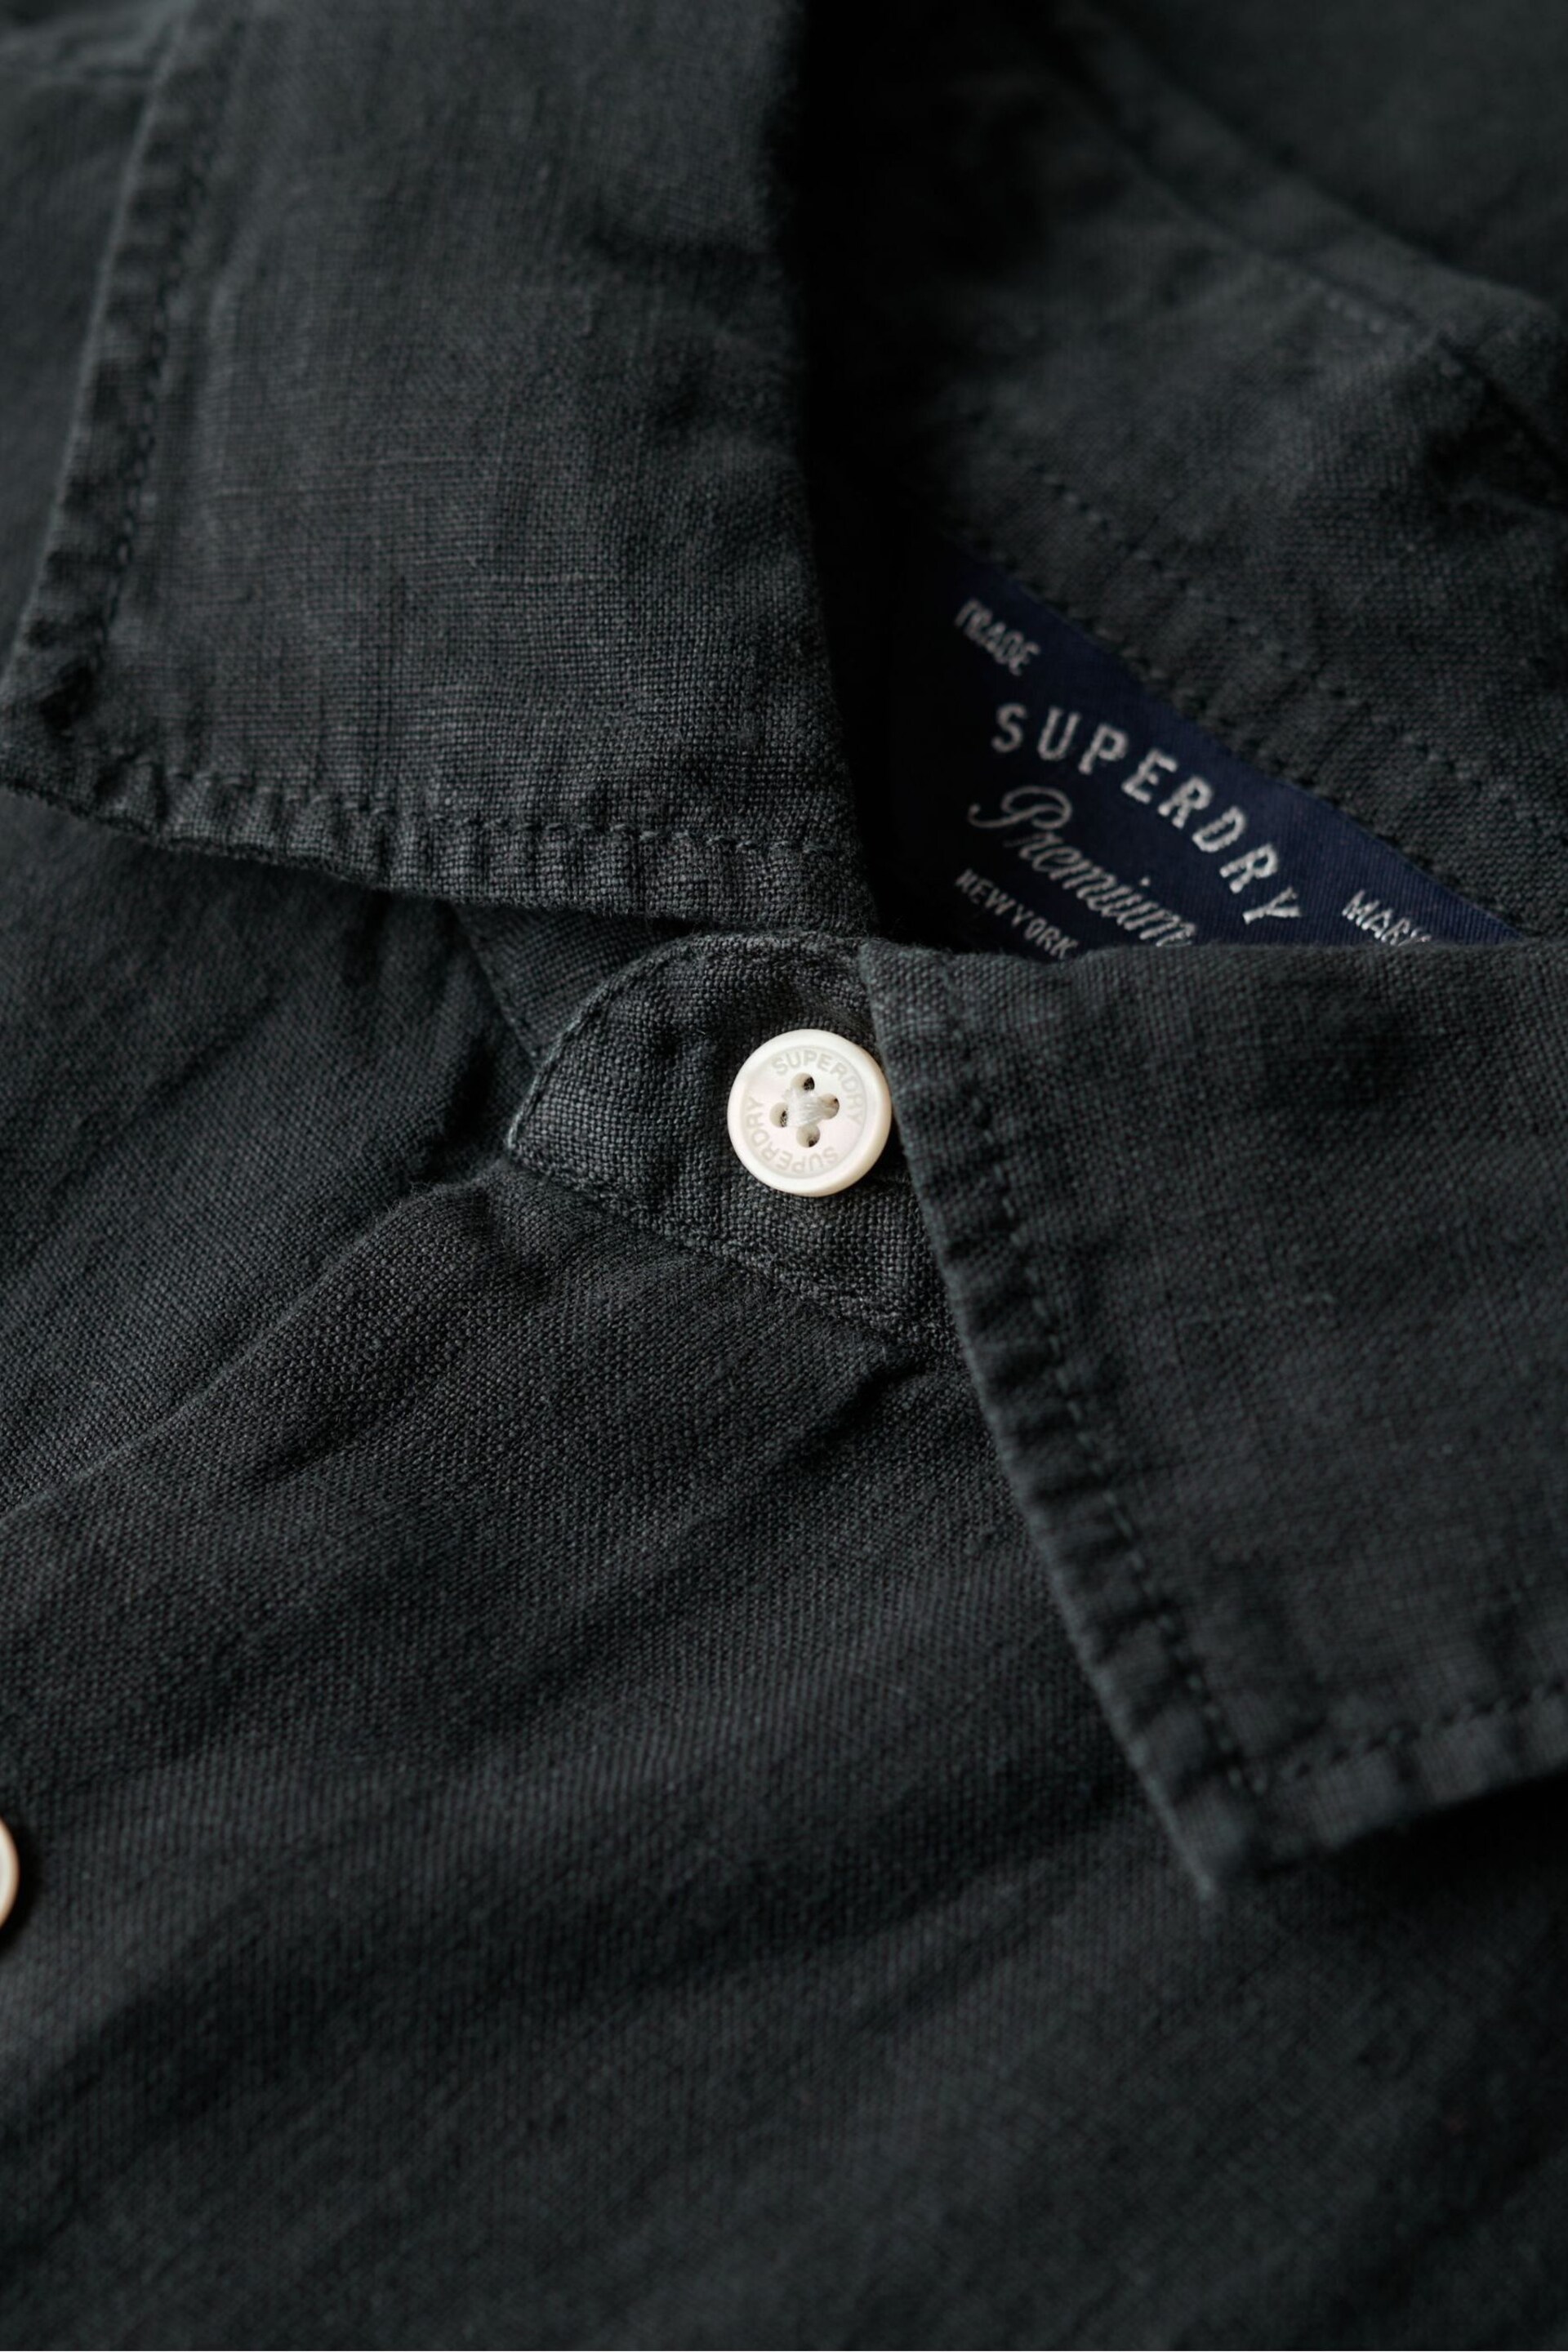 Superdry Black Studios Casual Linen Short Sleeved Shirt - Image 6 of 7